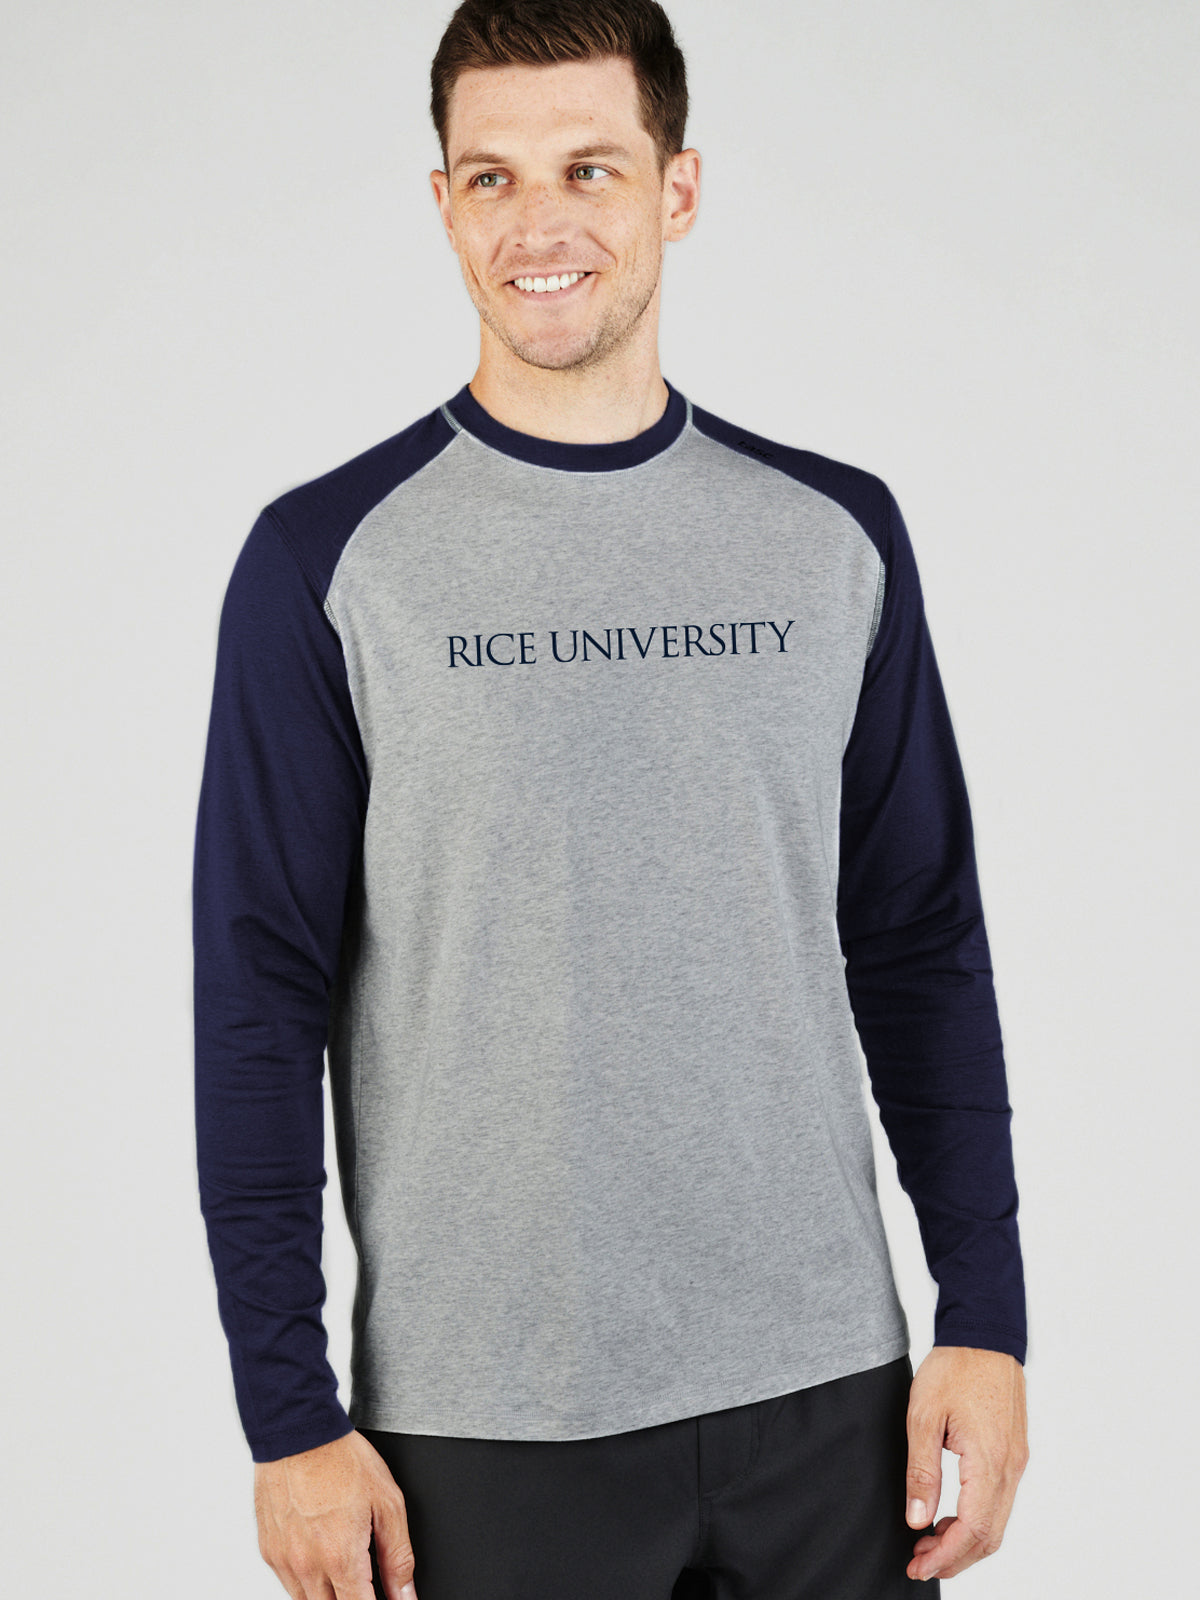 Carrollton Blocked Long Sleeve Fitness T-Shirt - Rice University - tasc Performance (LightHeatherGray/ClassicNavy)